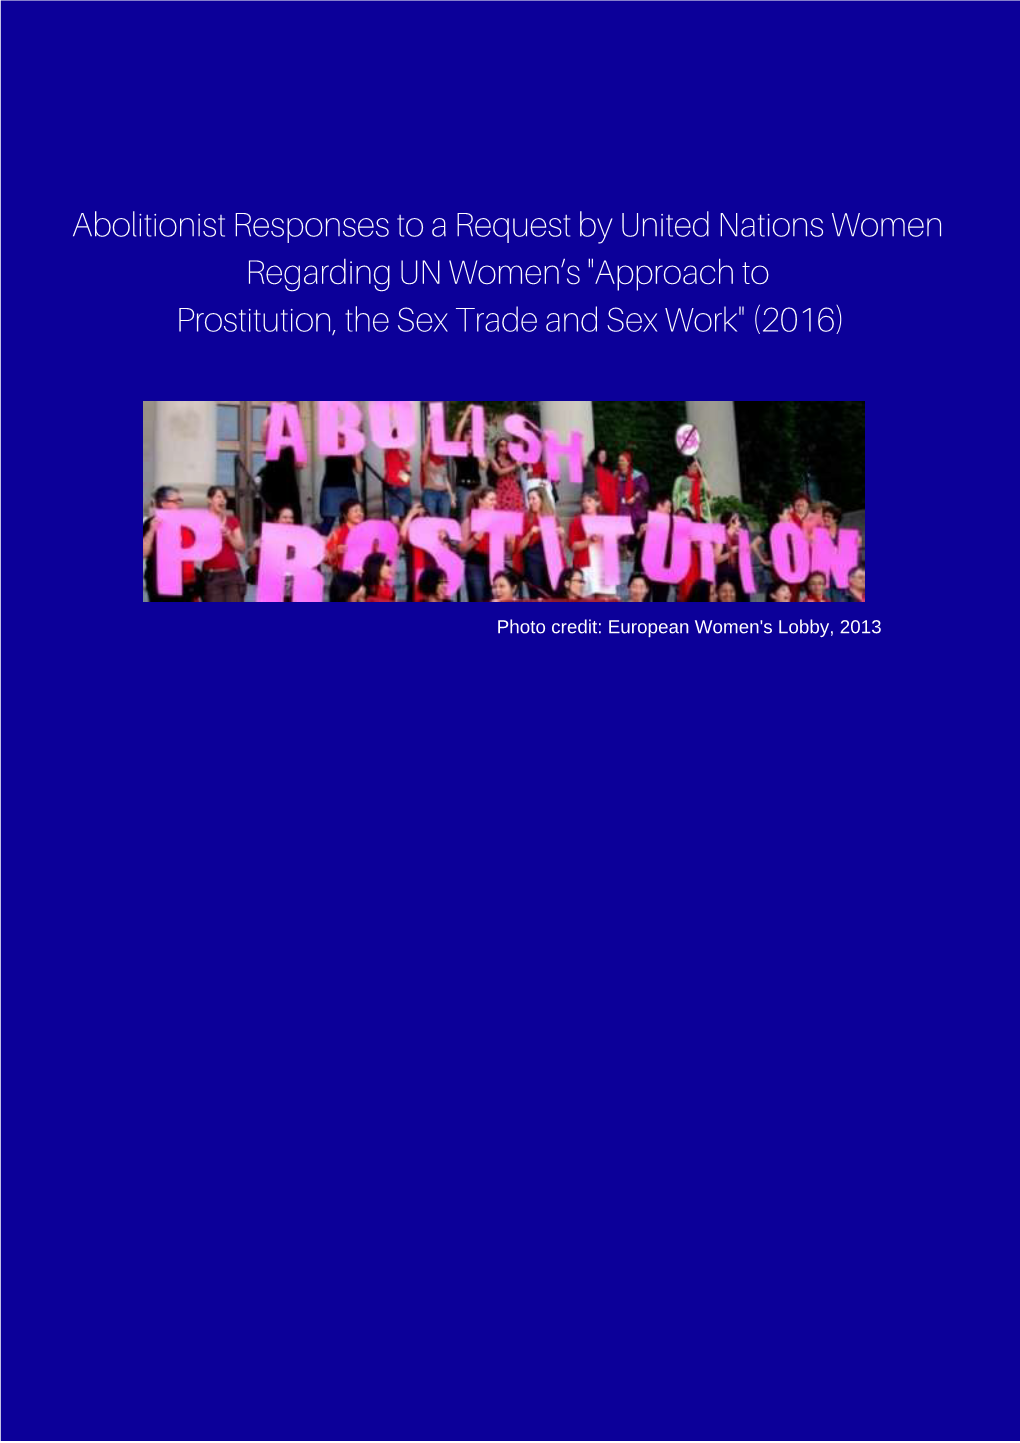 European Women's Lobby, 2013 Introduction